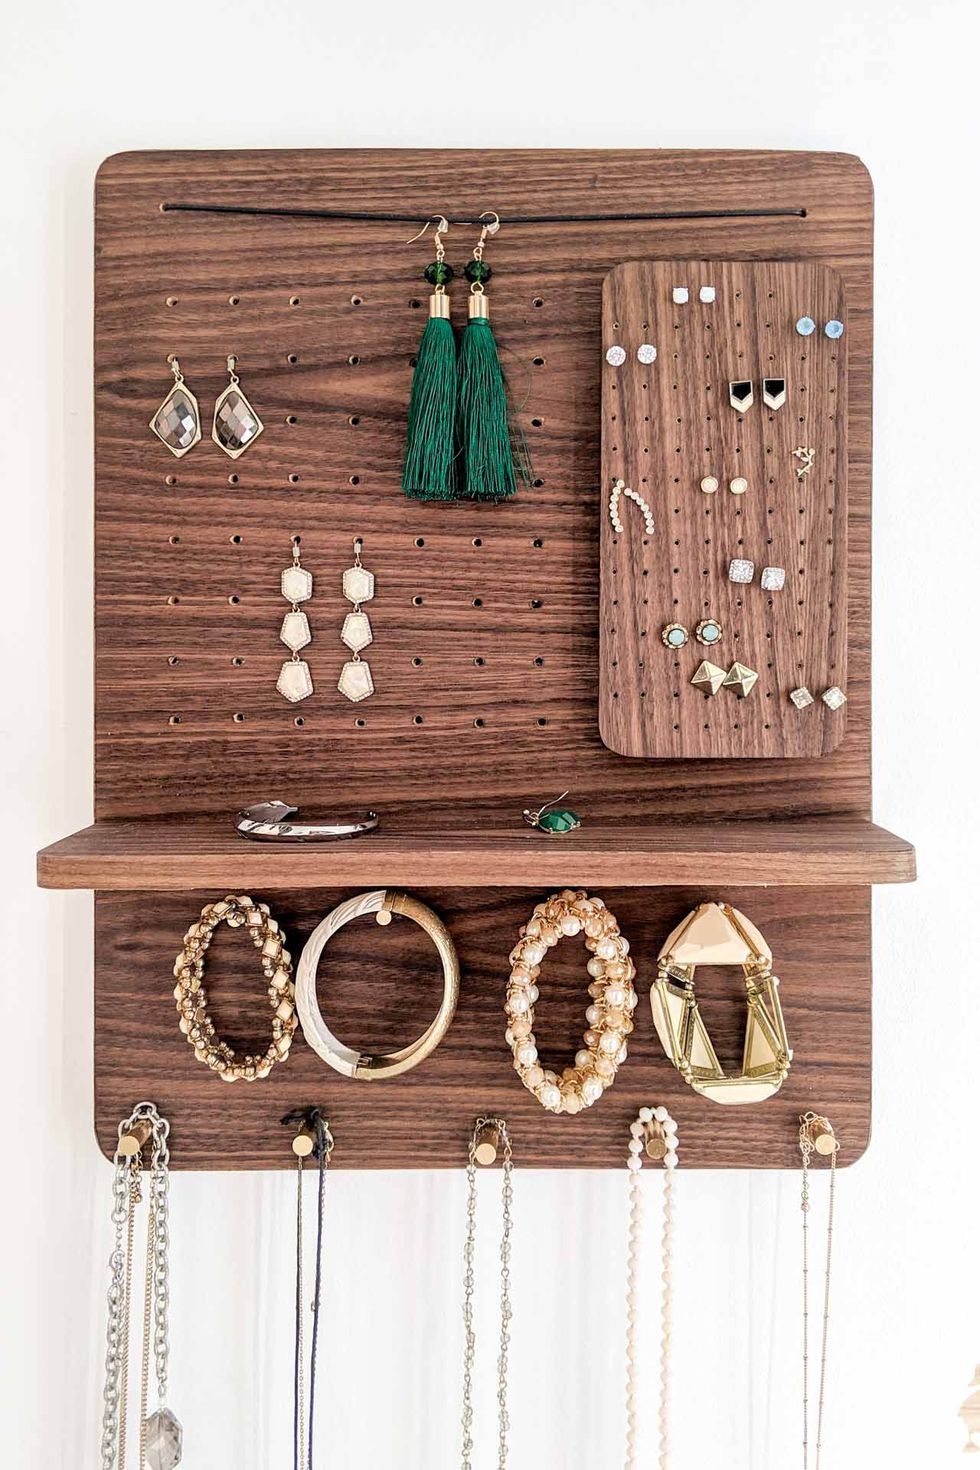 How to Organize a Jewelry Drawer: 13 Ideas